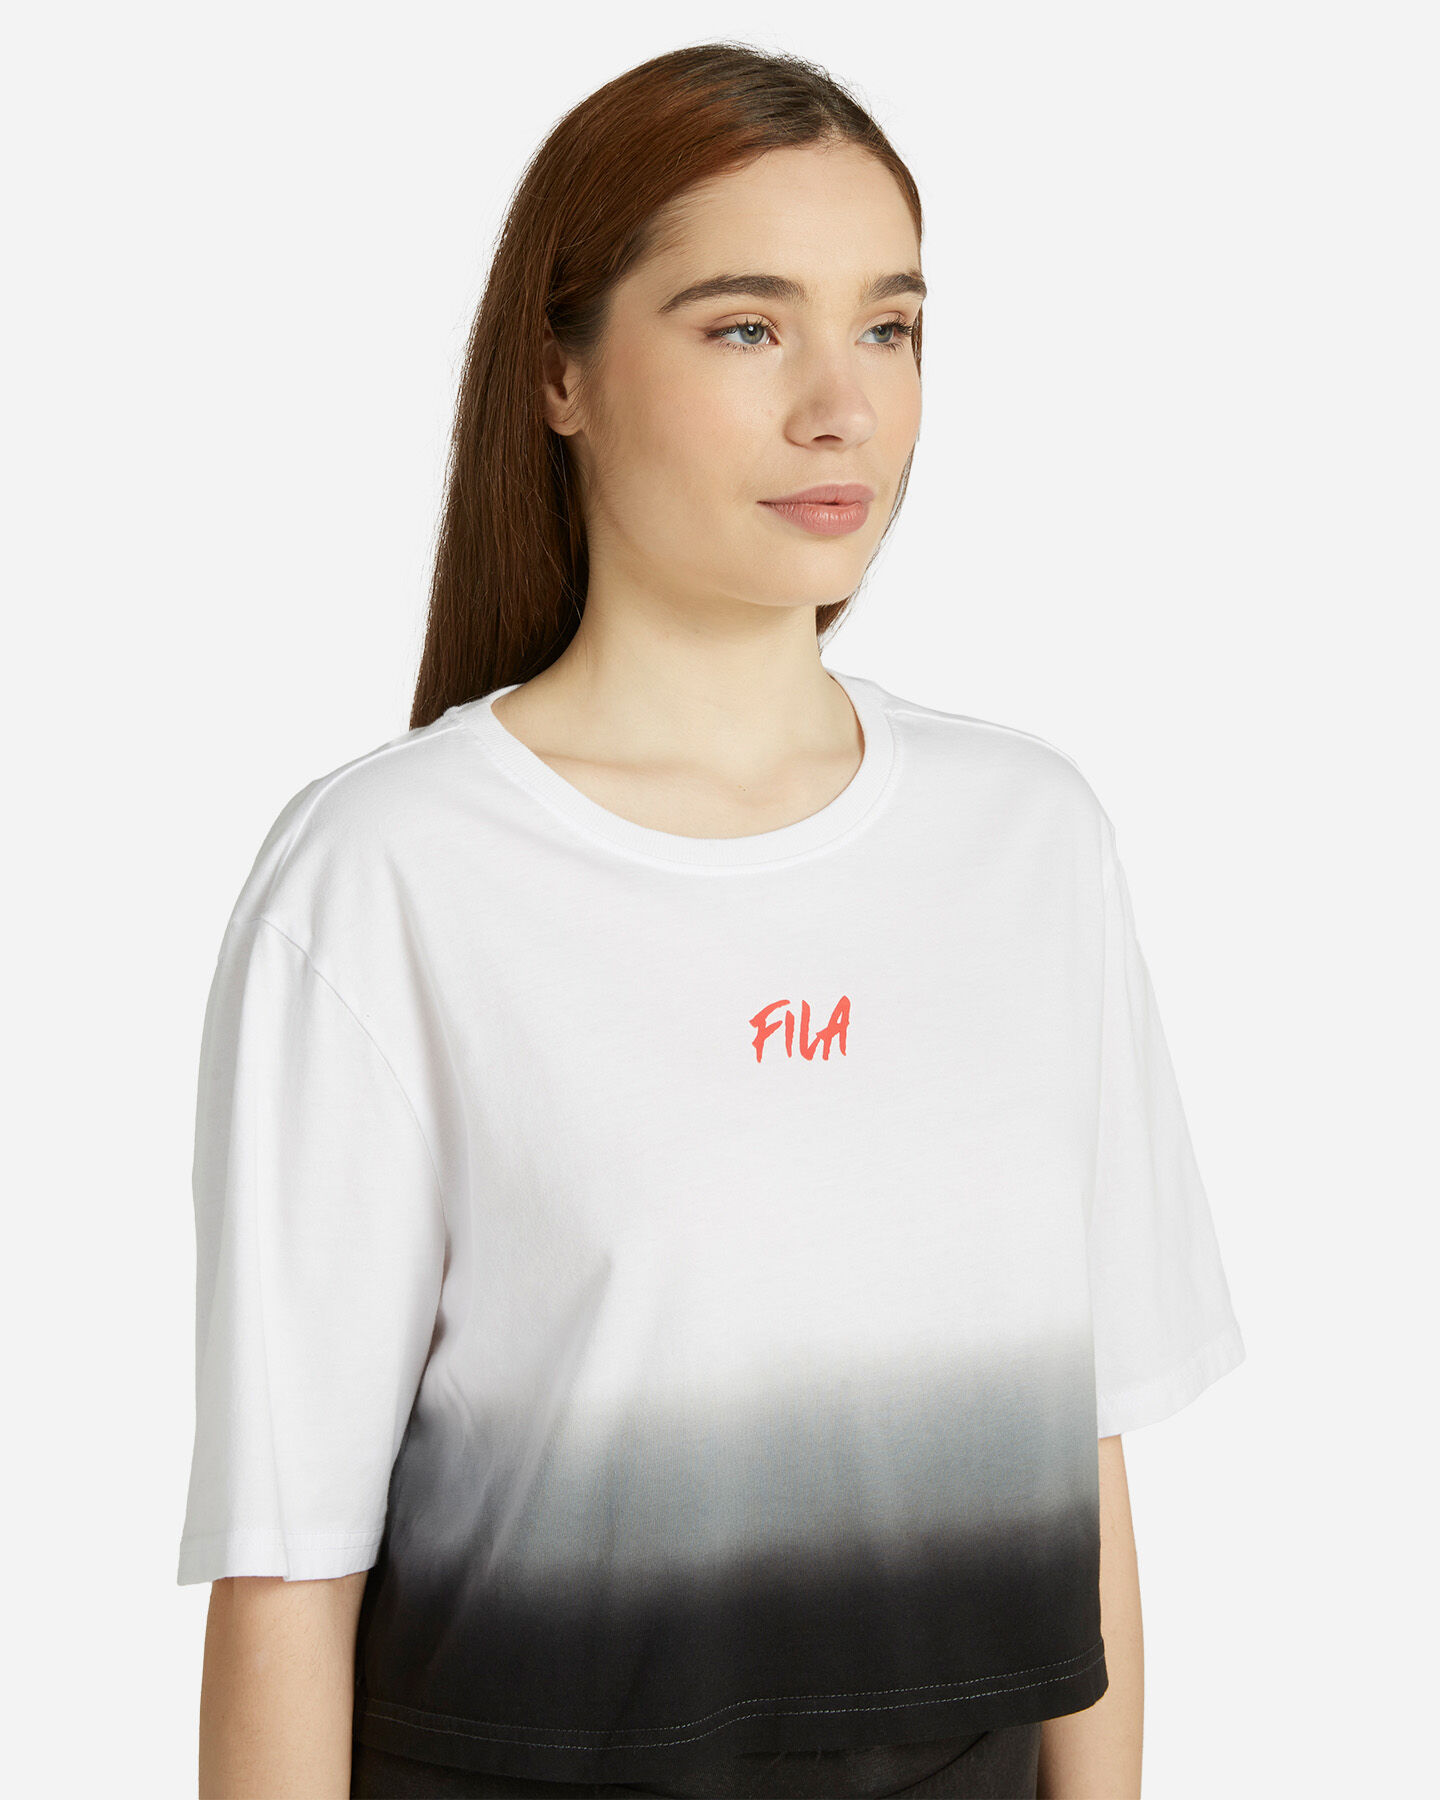  T-Shirt FILA PUNK WASHED W S4119331|001|XS scatto 4